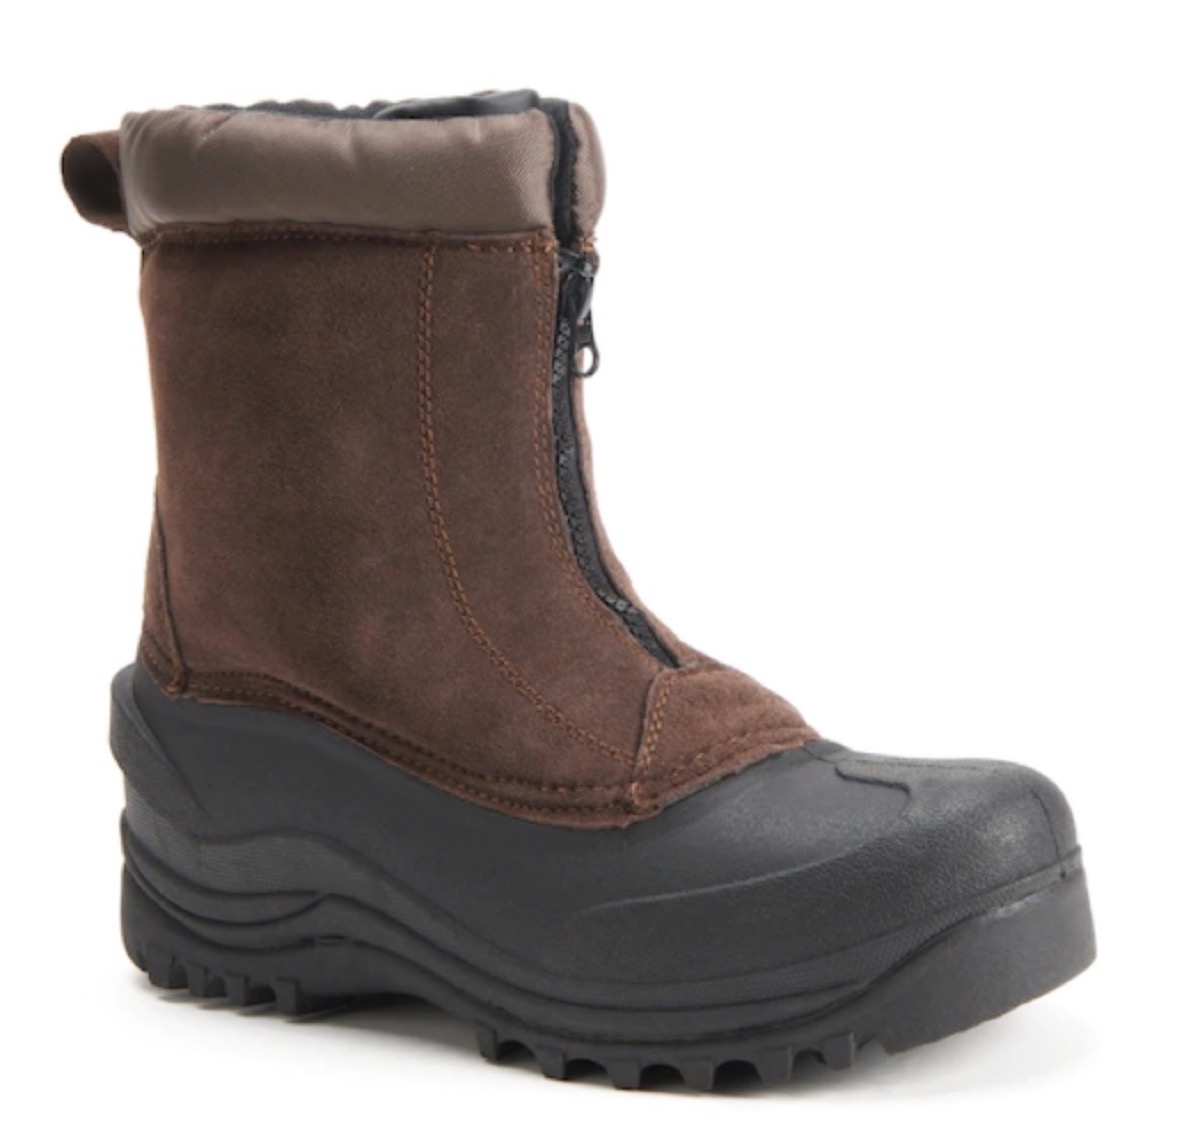 brown suede boots, men's winter boots